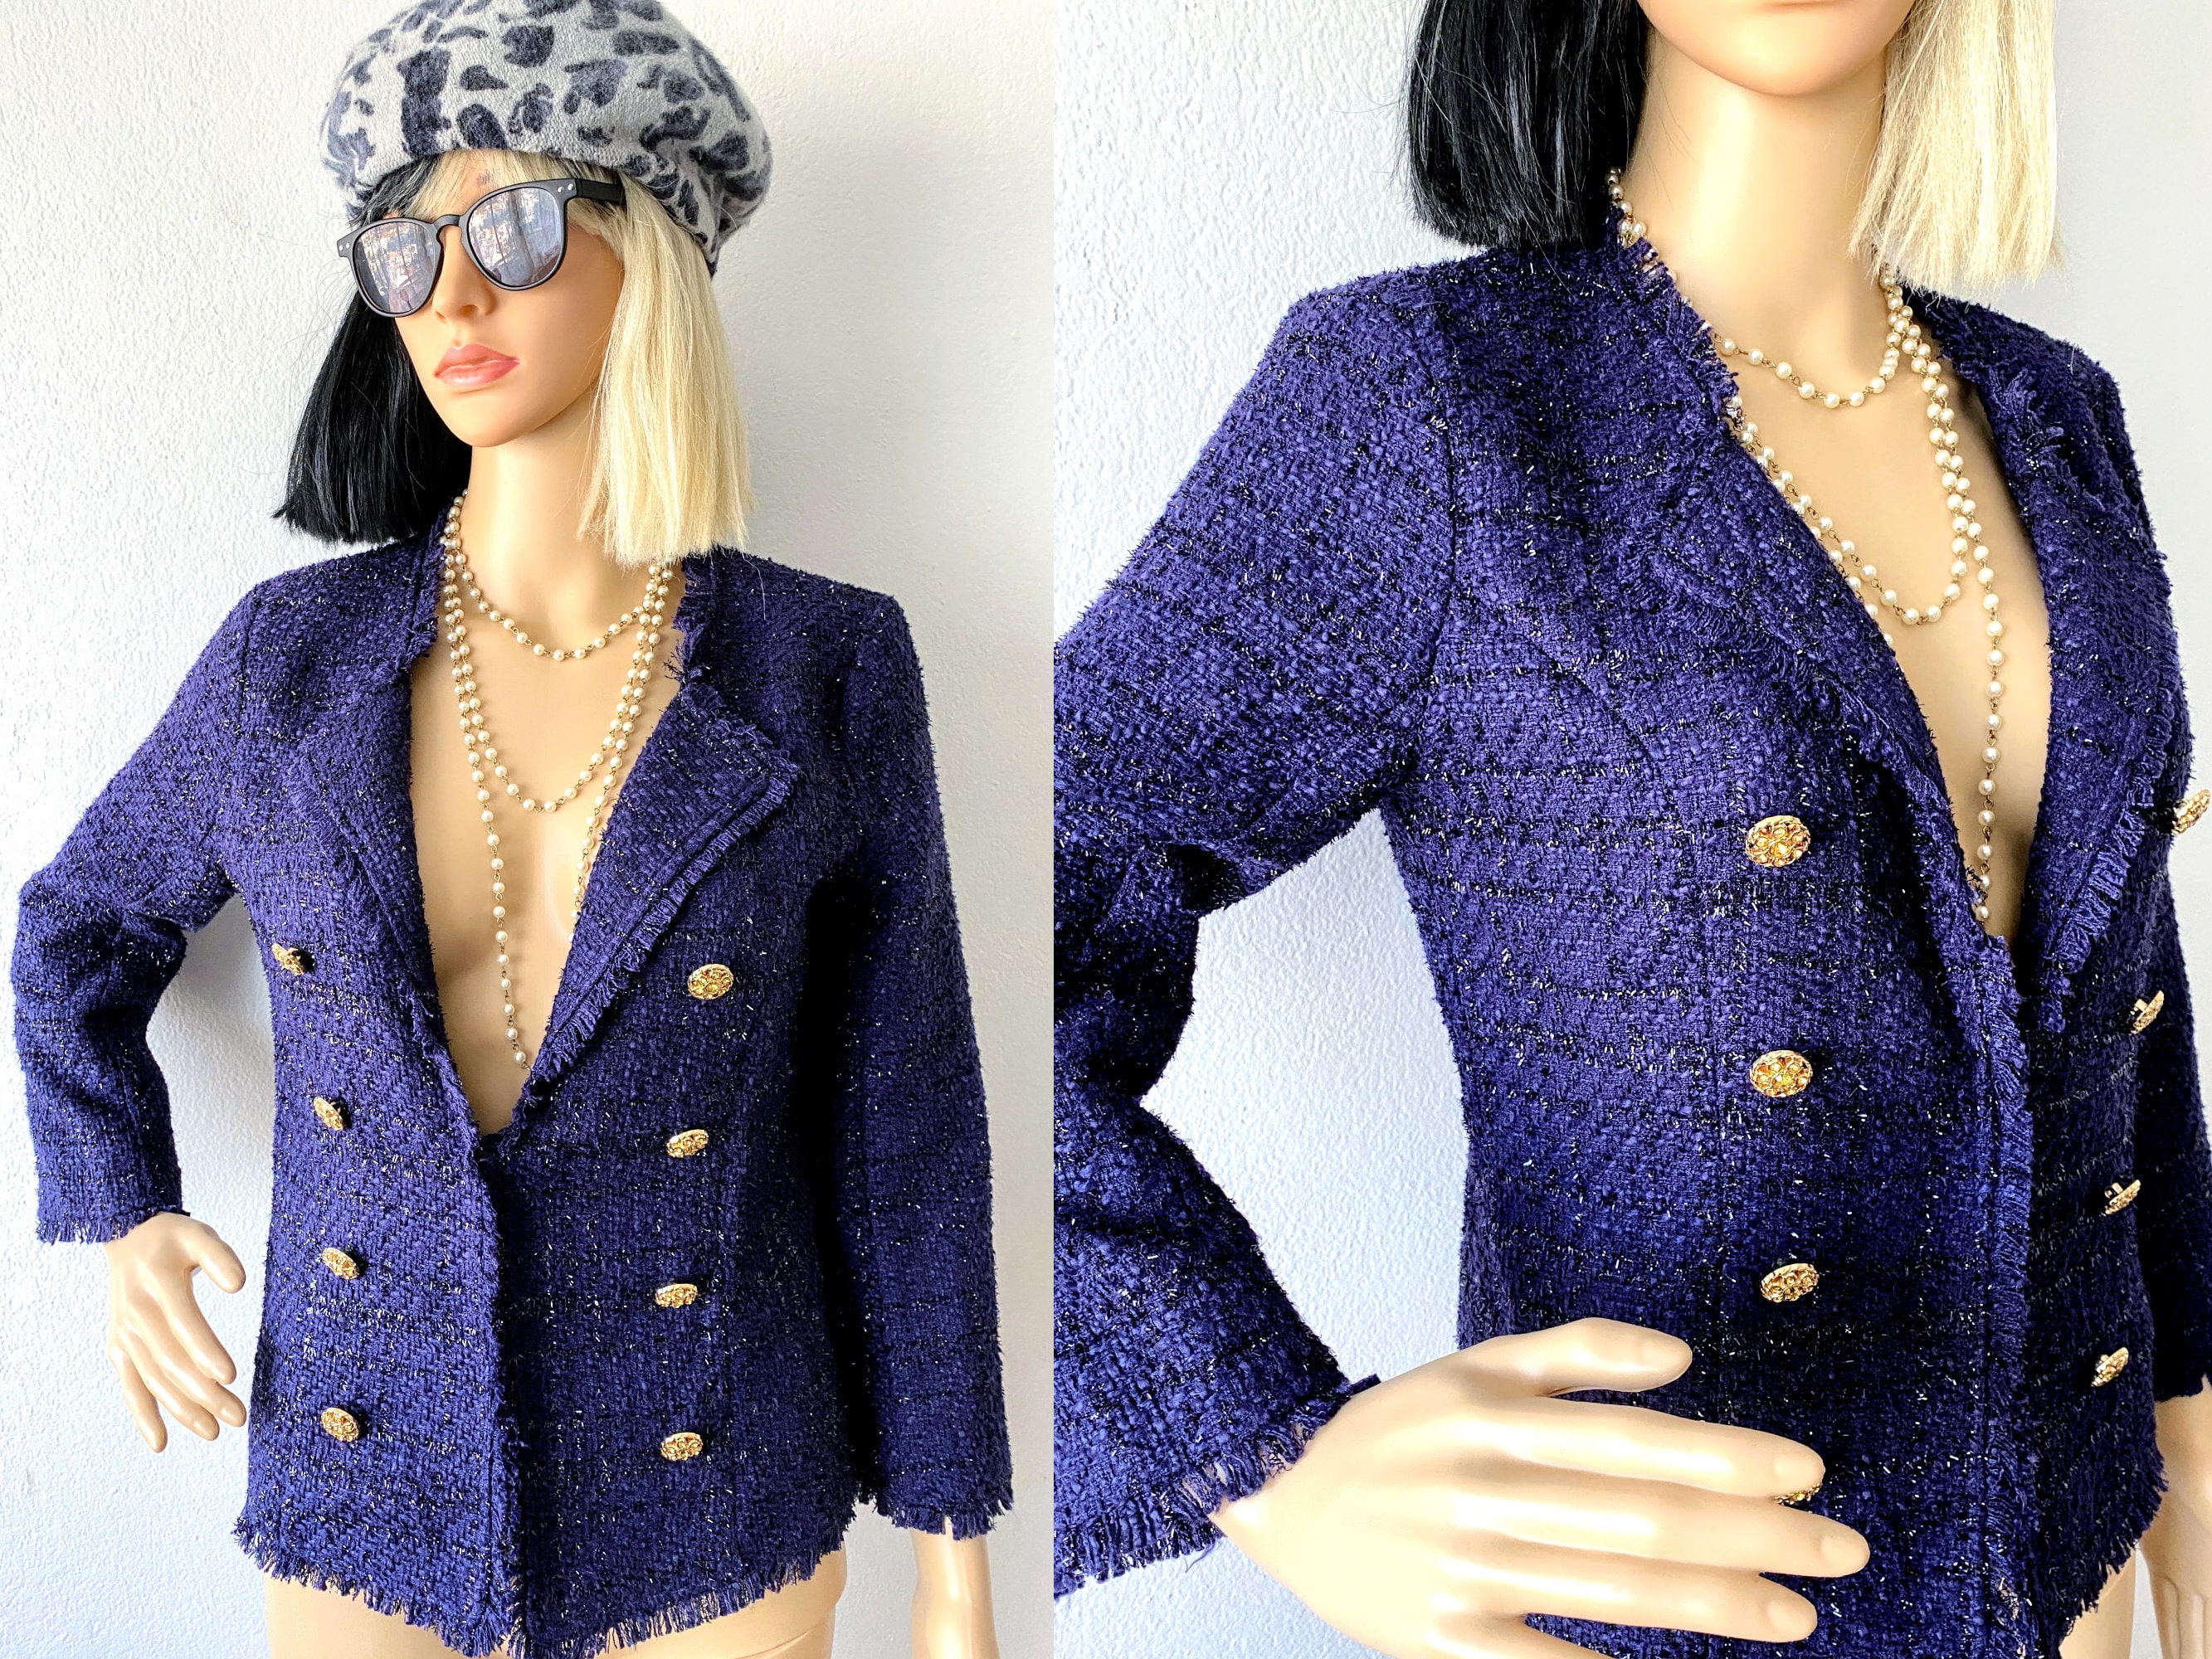 Coco Chanel Inspired Boucle Tweed Box Jacket Blazer - Lilac